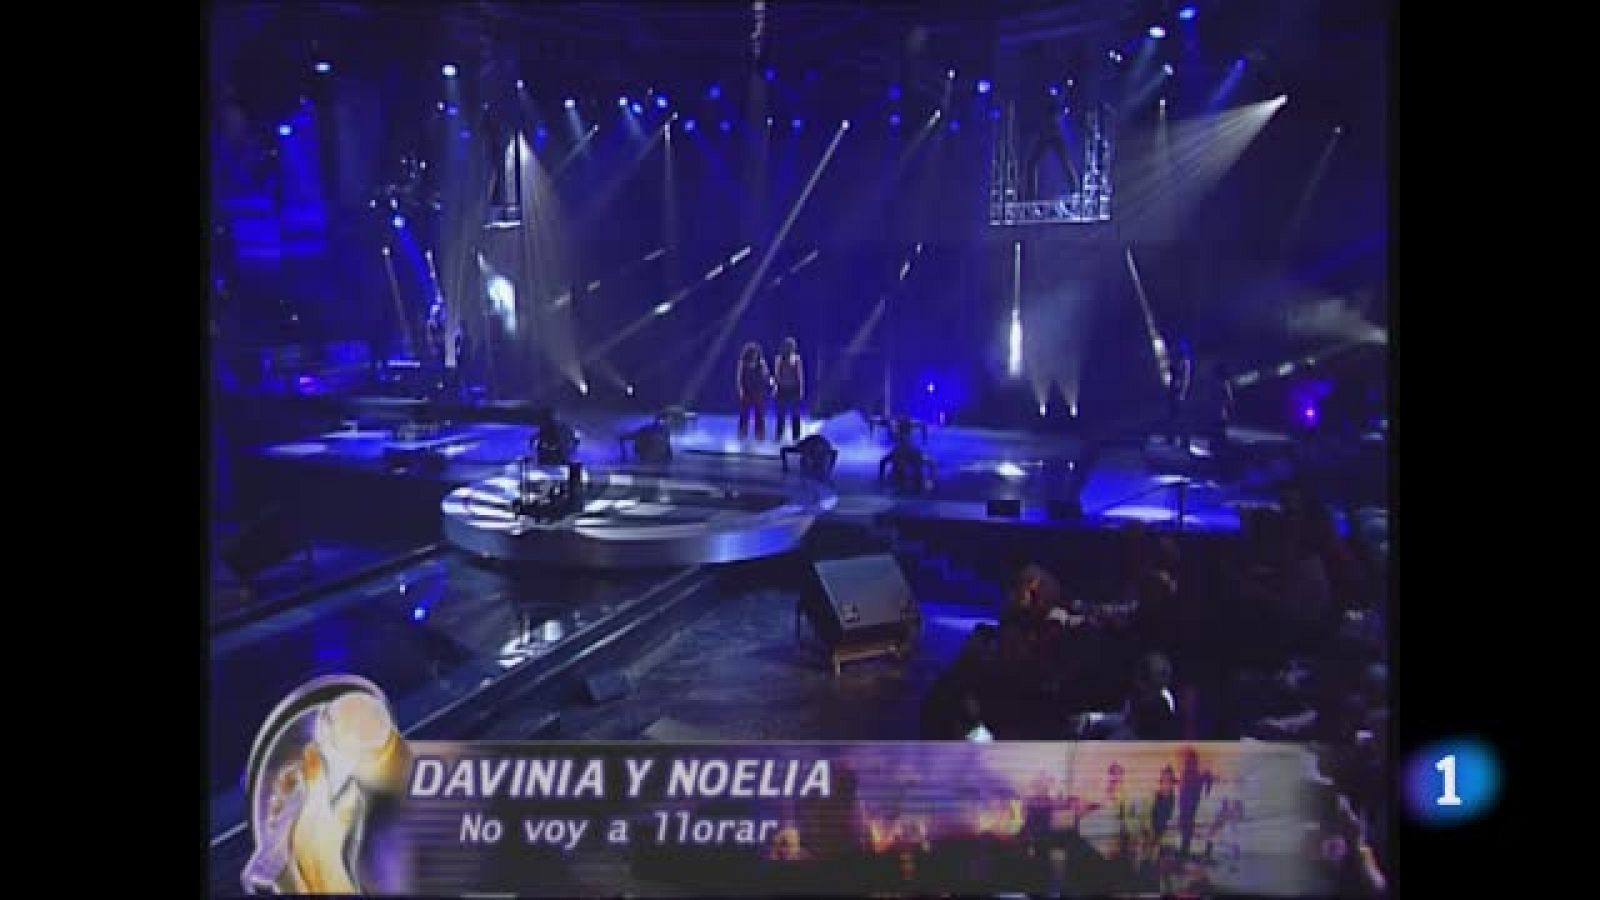 OT 2020 | Noelia y Davinia de OT 2003 cantan"No voy a llorar"